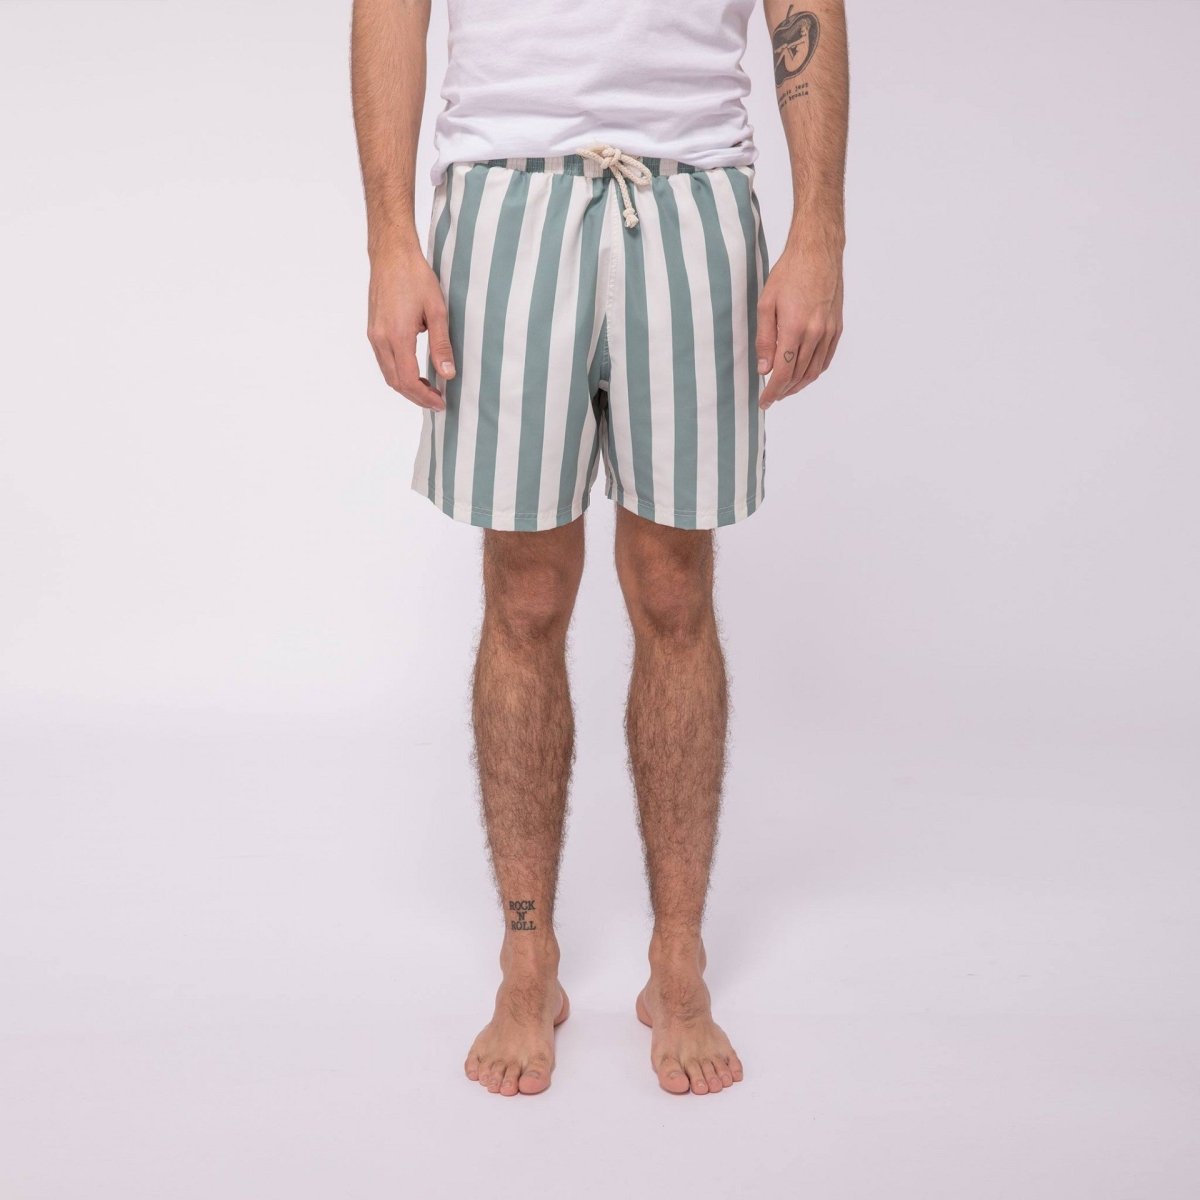 Mimizan Ecru & Green Stripes Swim Shorts - The Good Chic